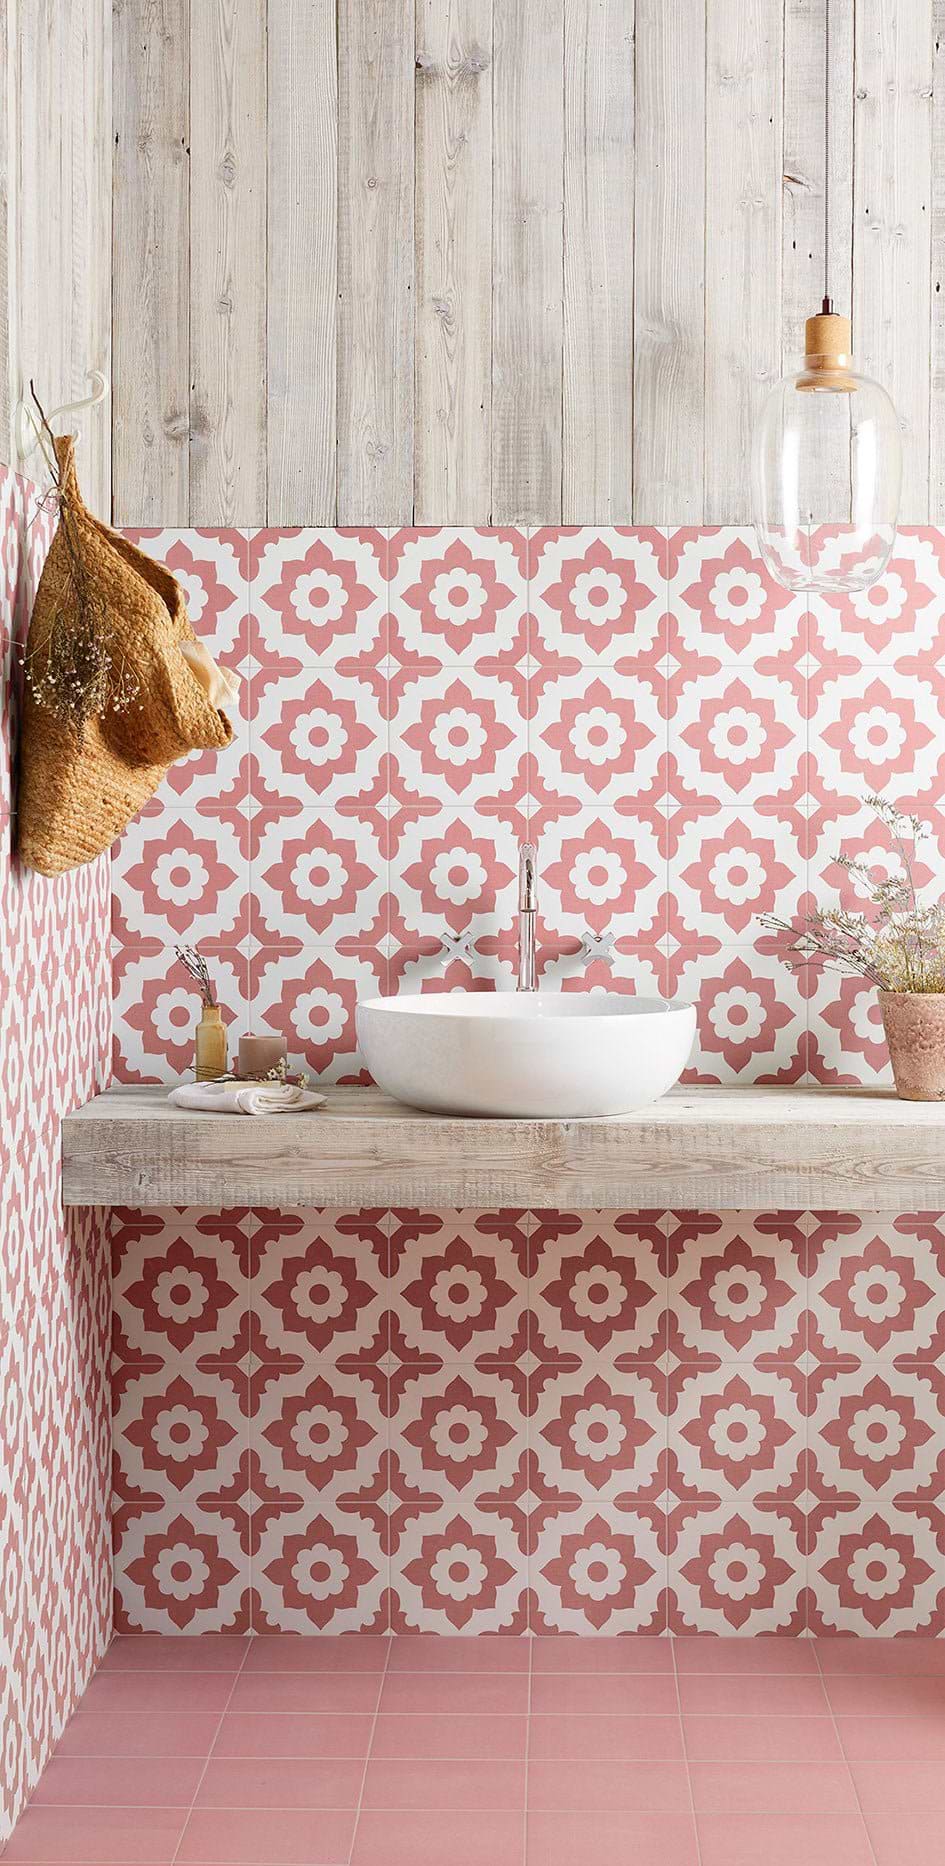 Stunning bathroom tile design ideas to inspire you - Hyperion Tiles